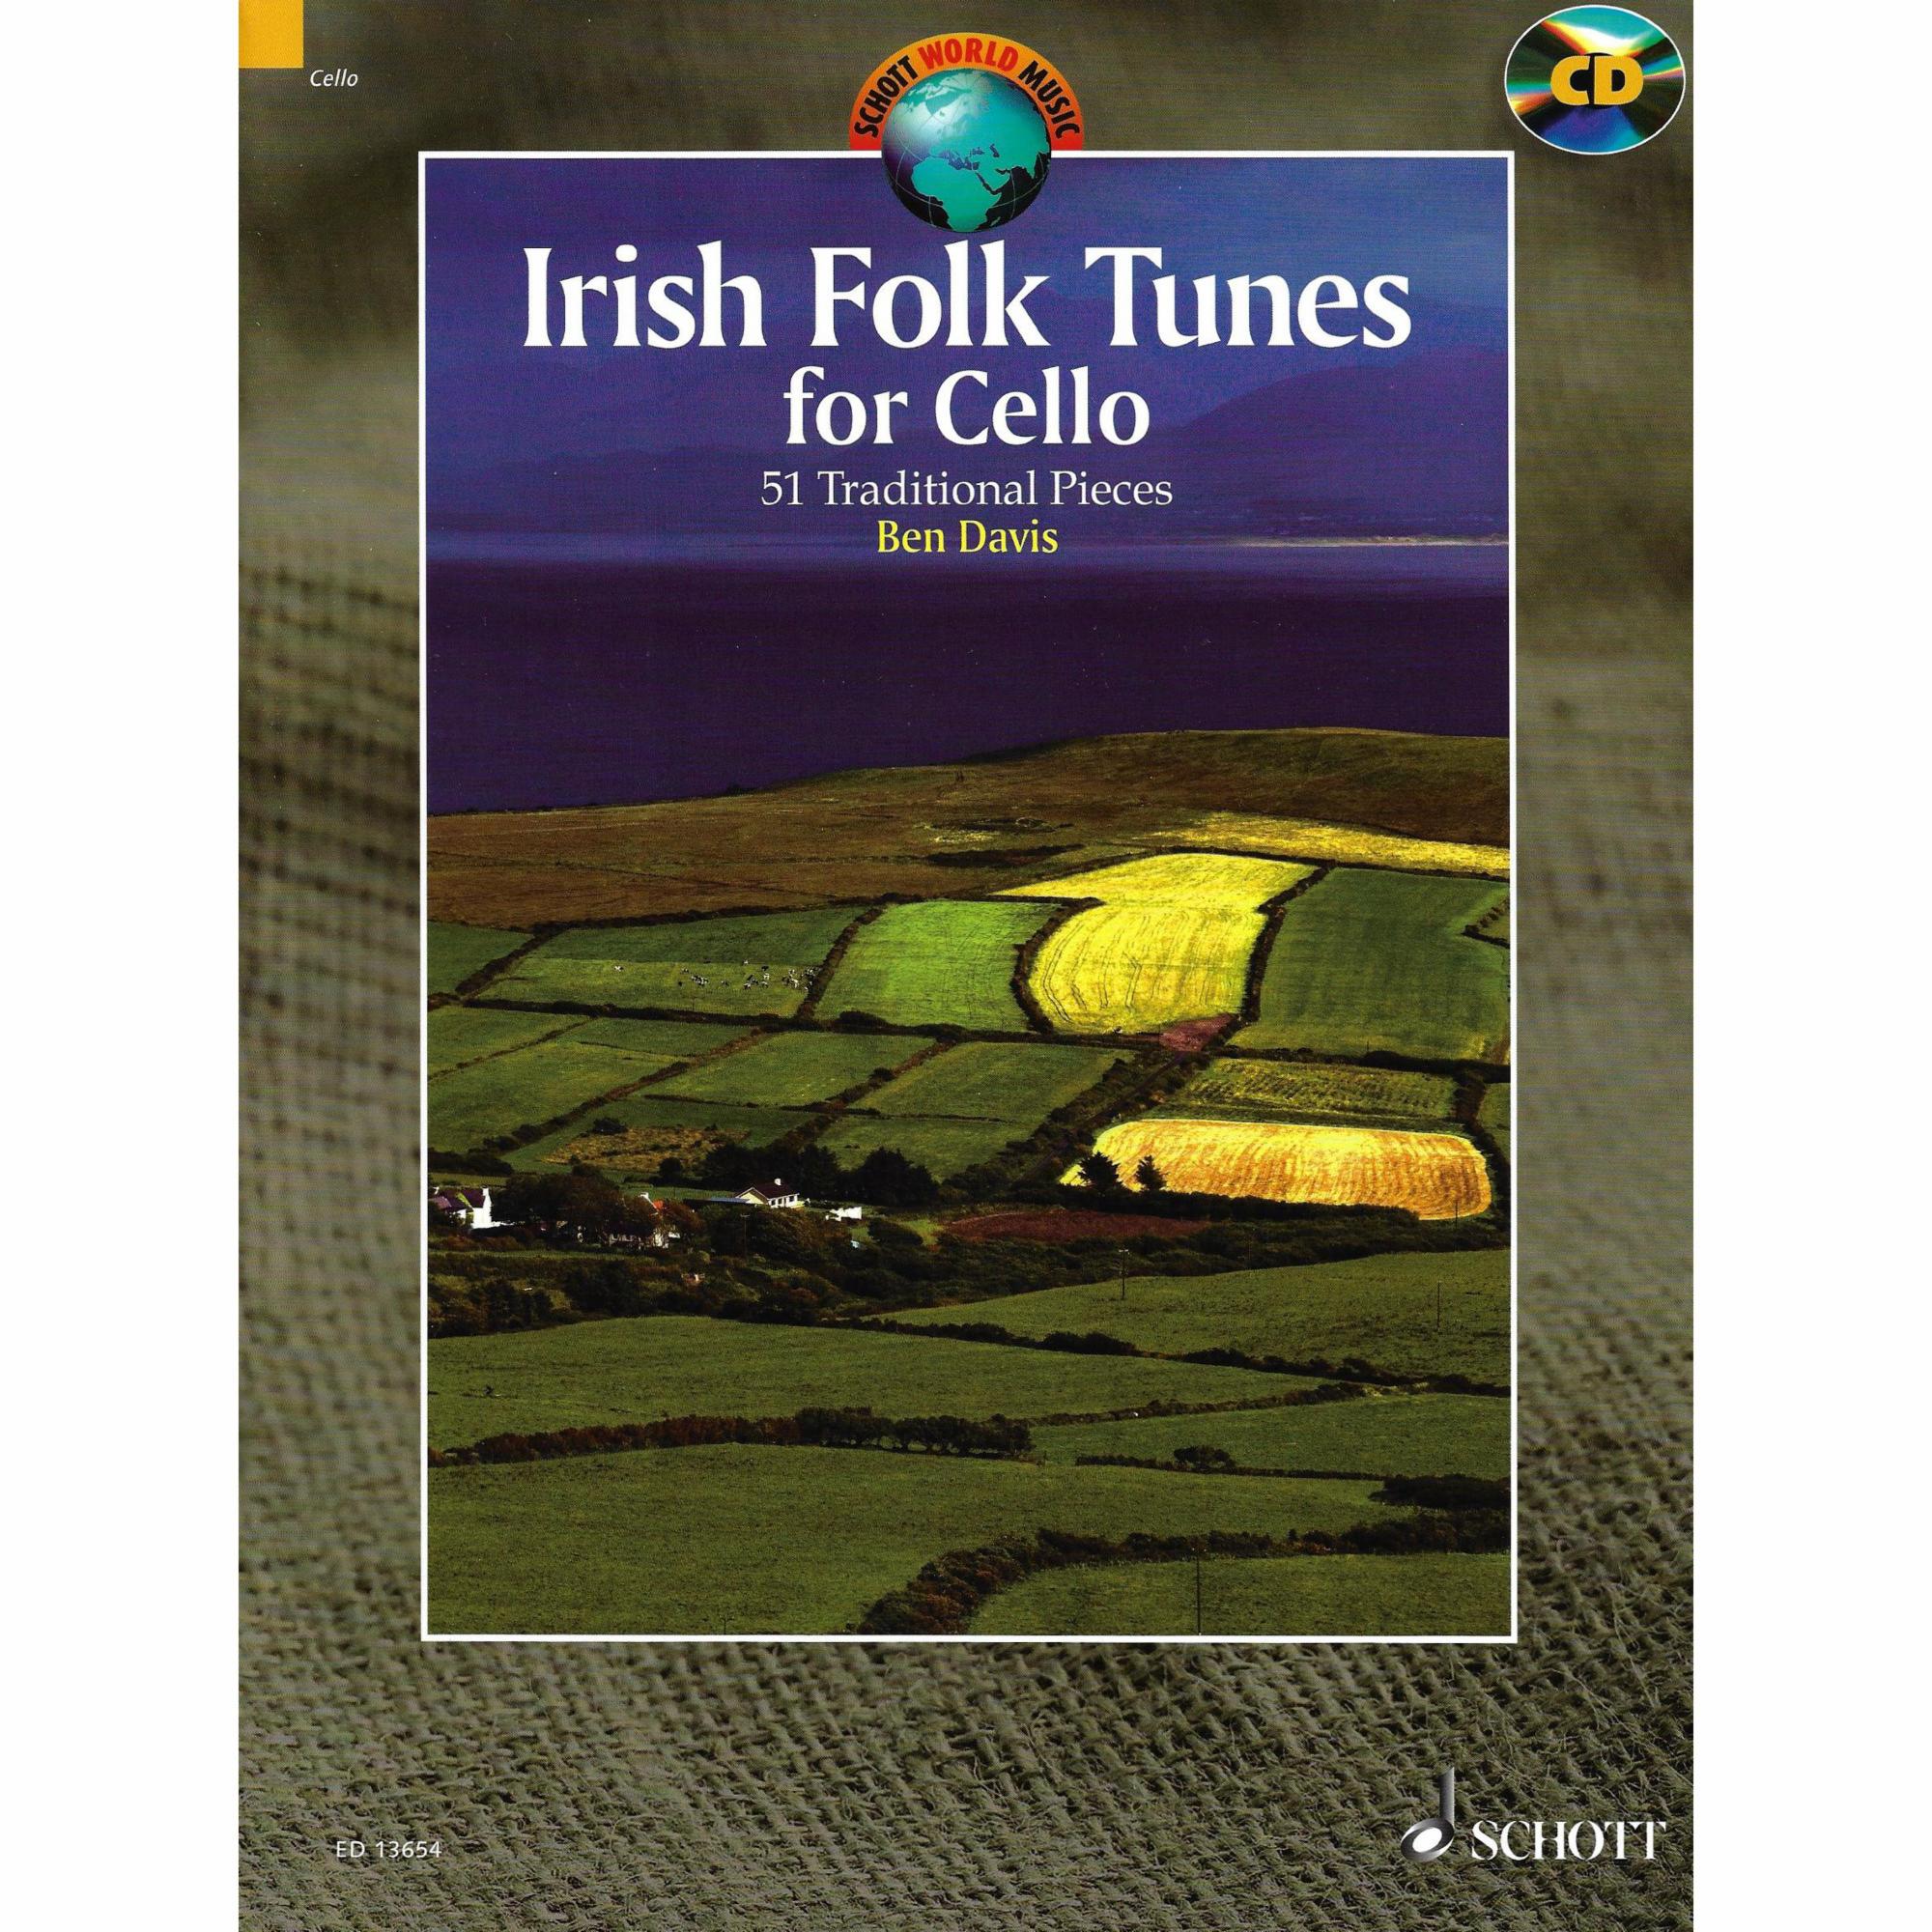 Irish Folk Tunes for Cello